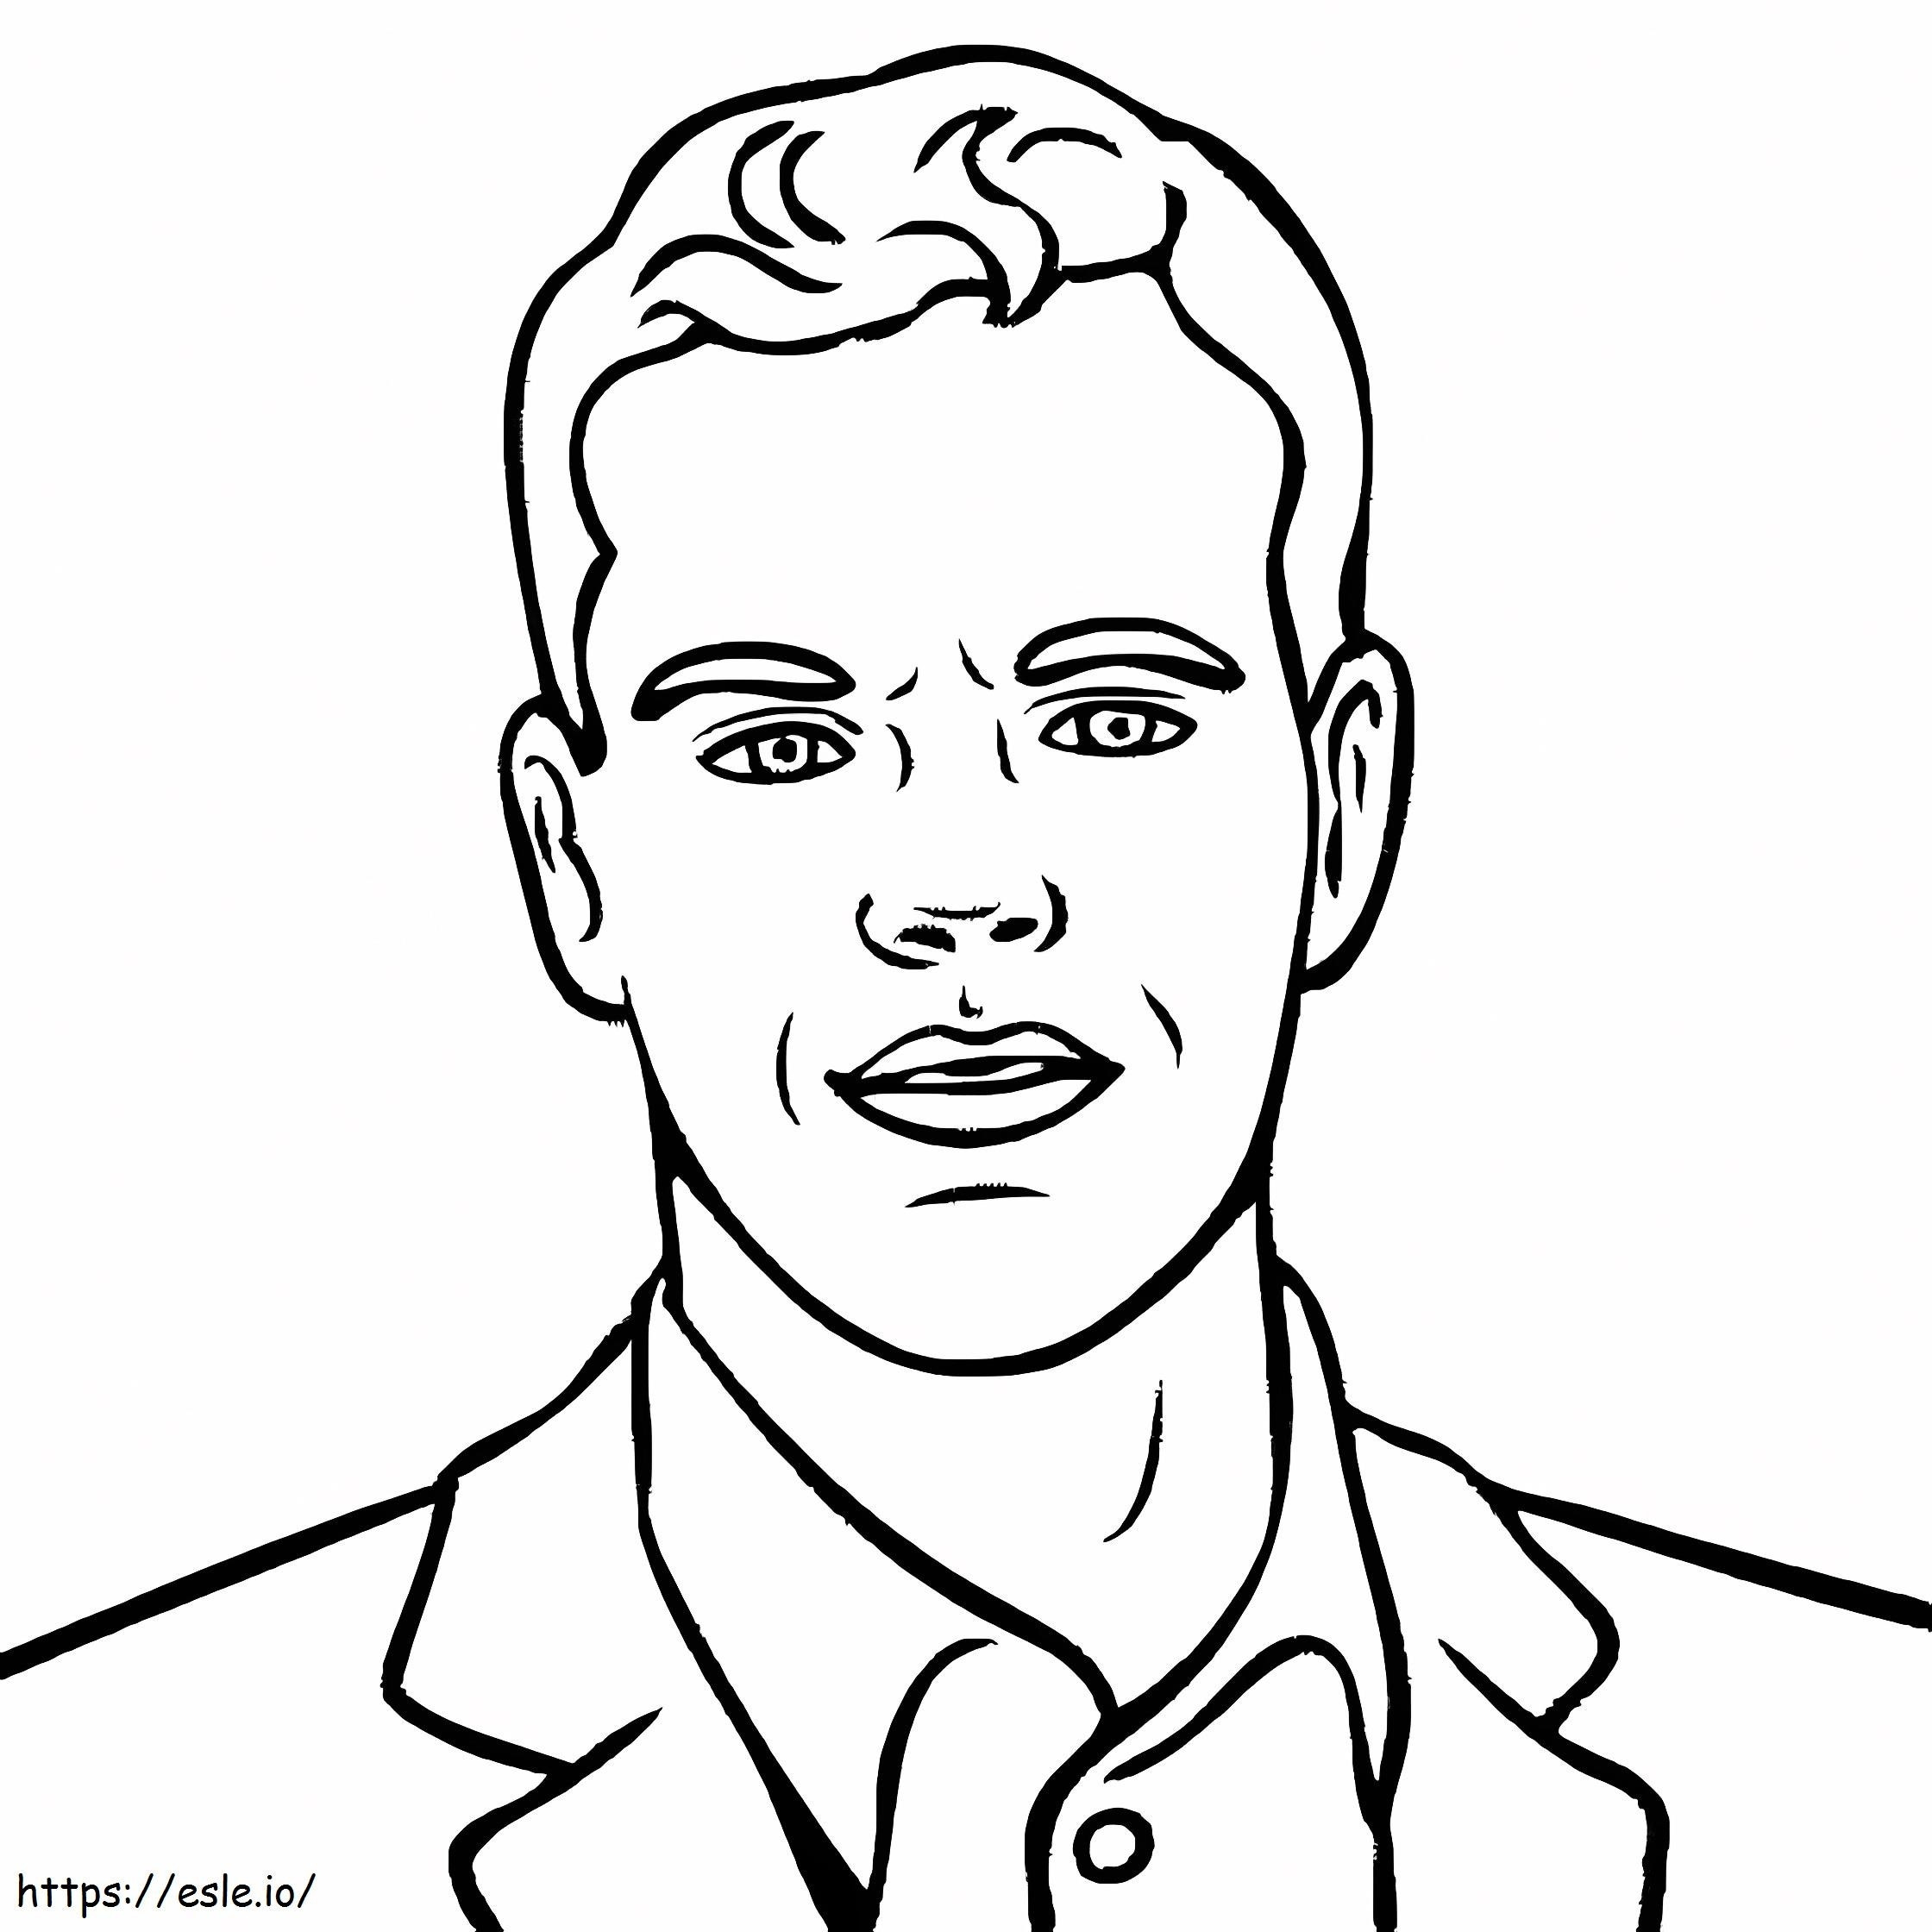 Young Matt Damon coloring page